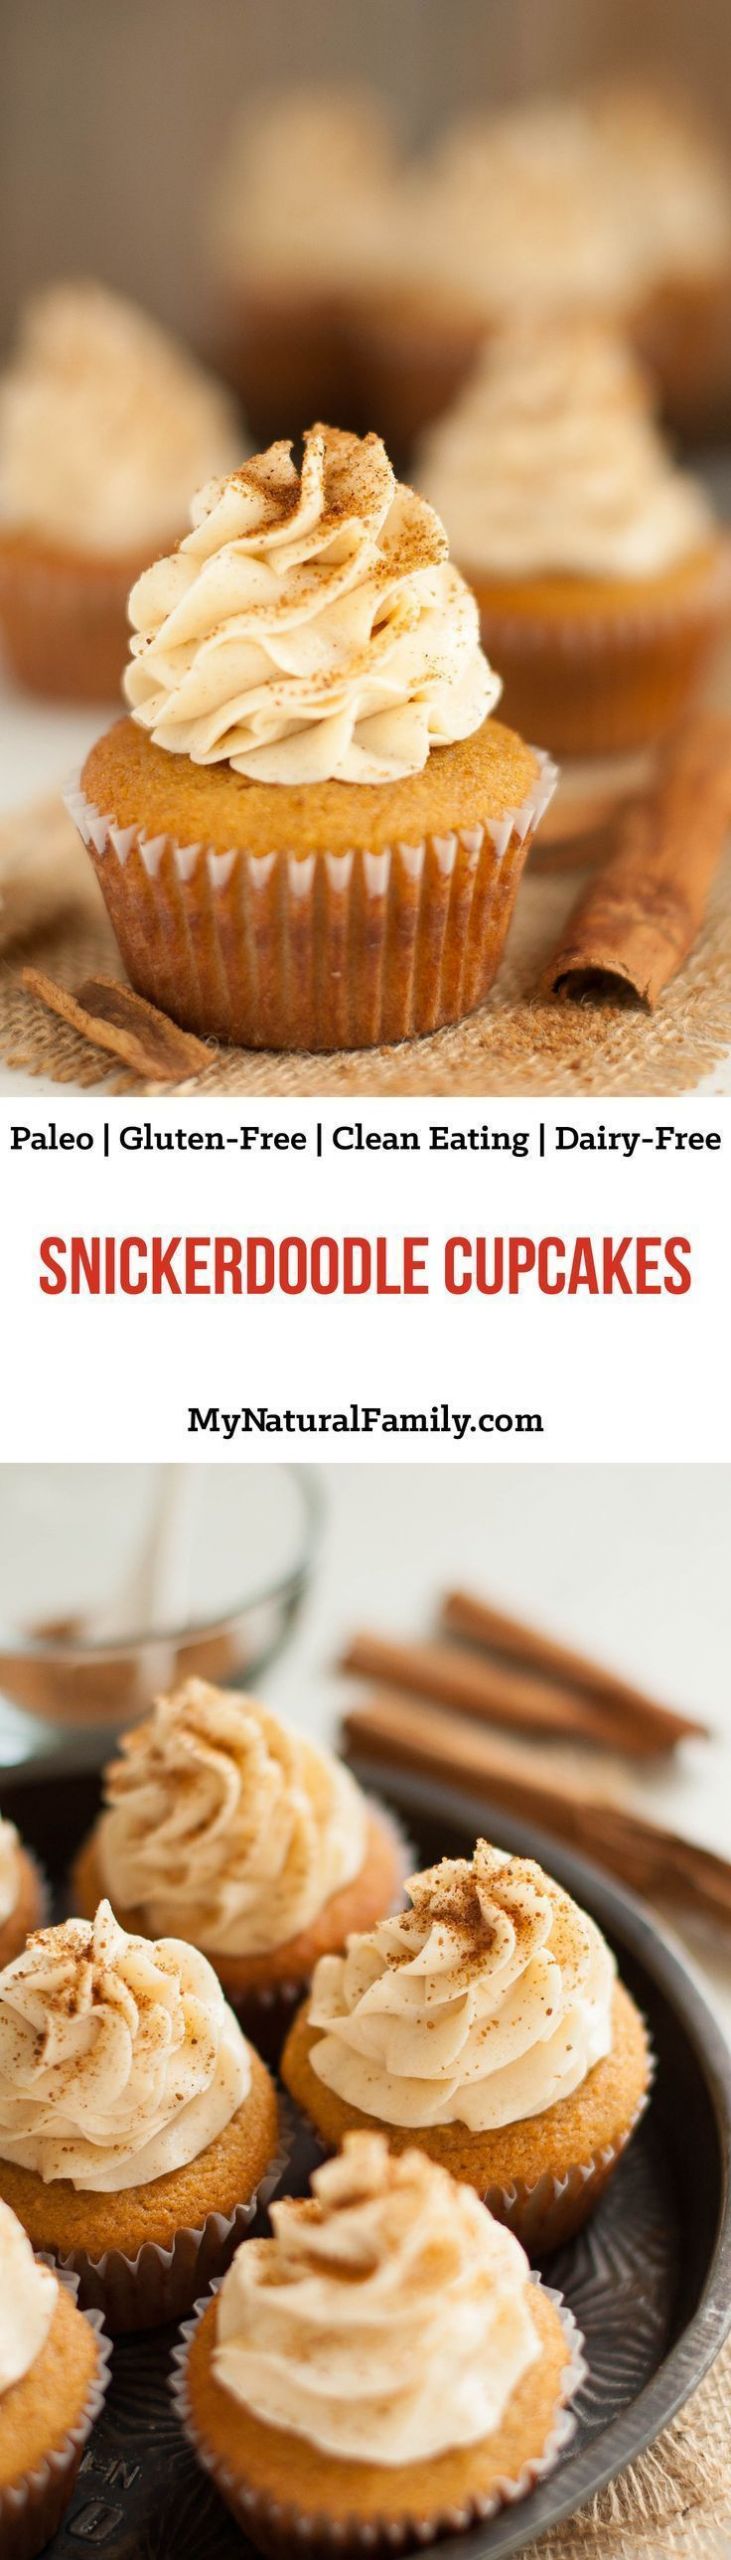 Paleo Cupcakes Recipe
 Snickerdoodle Paleo Cupcakes with Coconut Flour